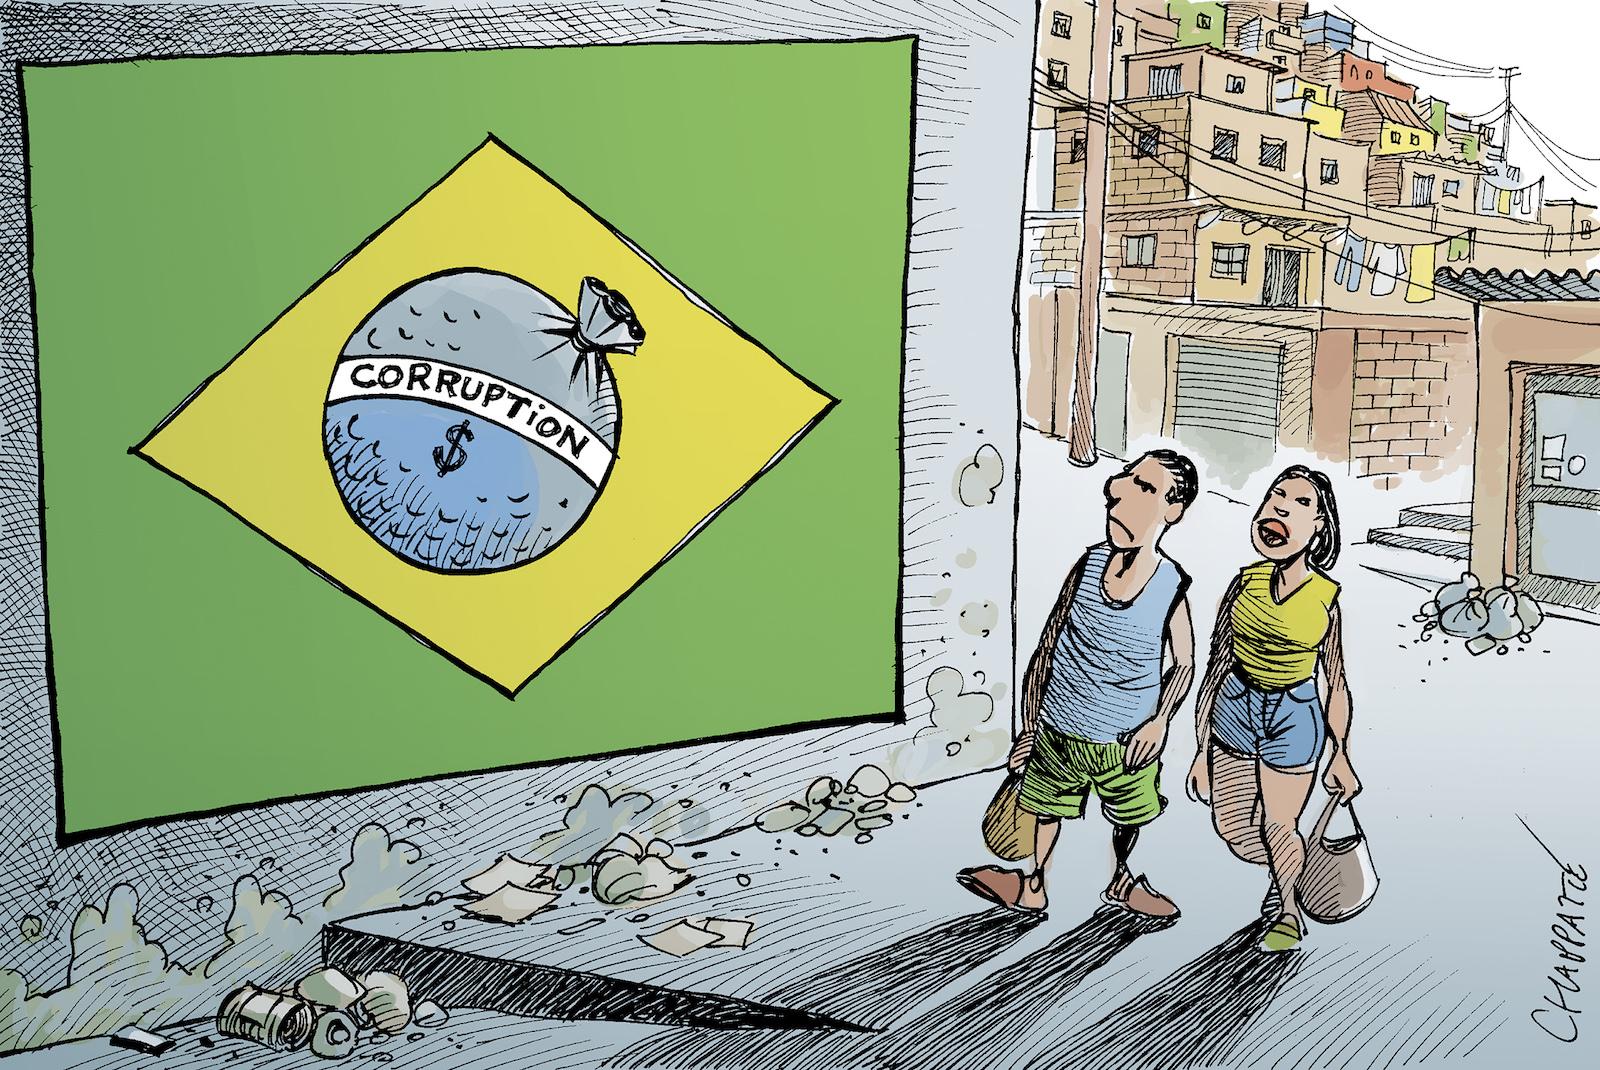 Brazil and corruption